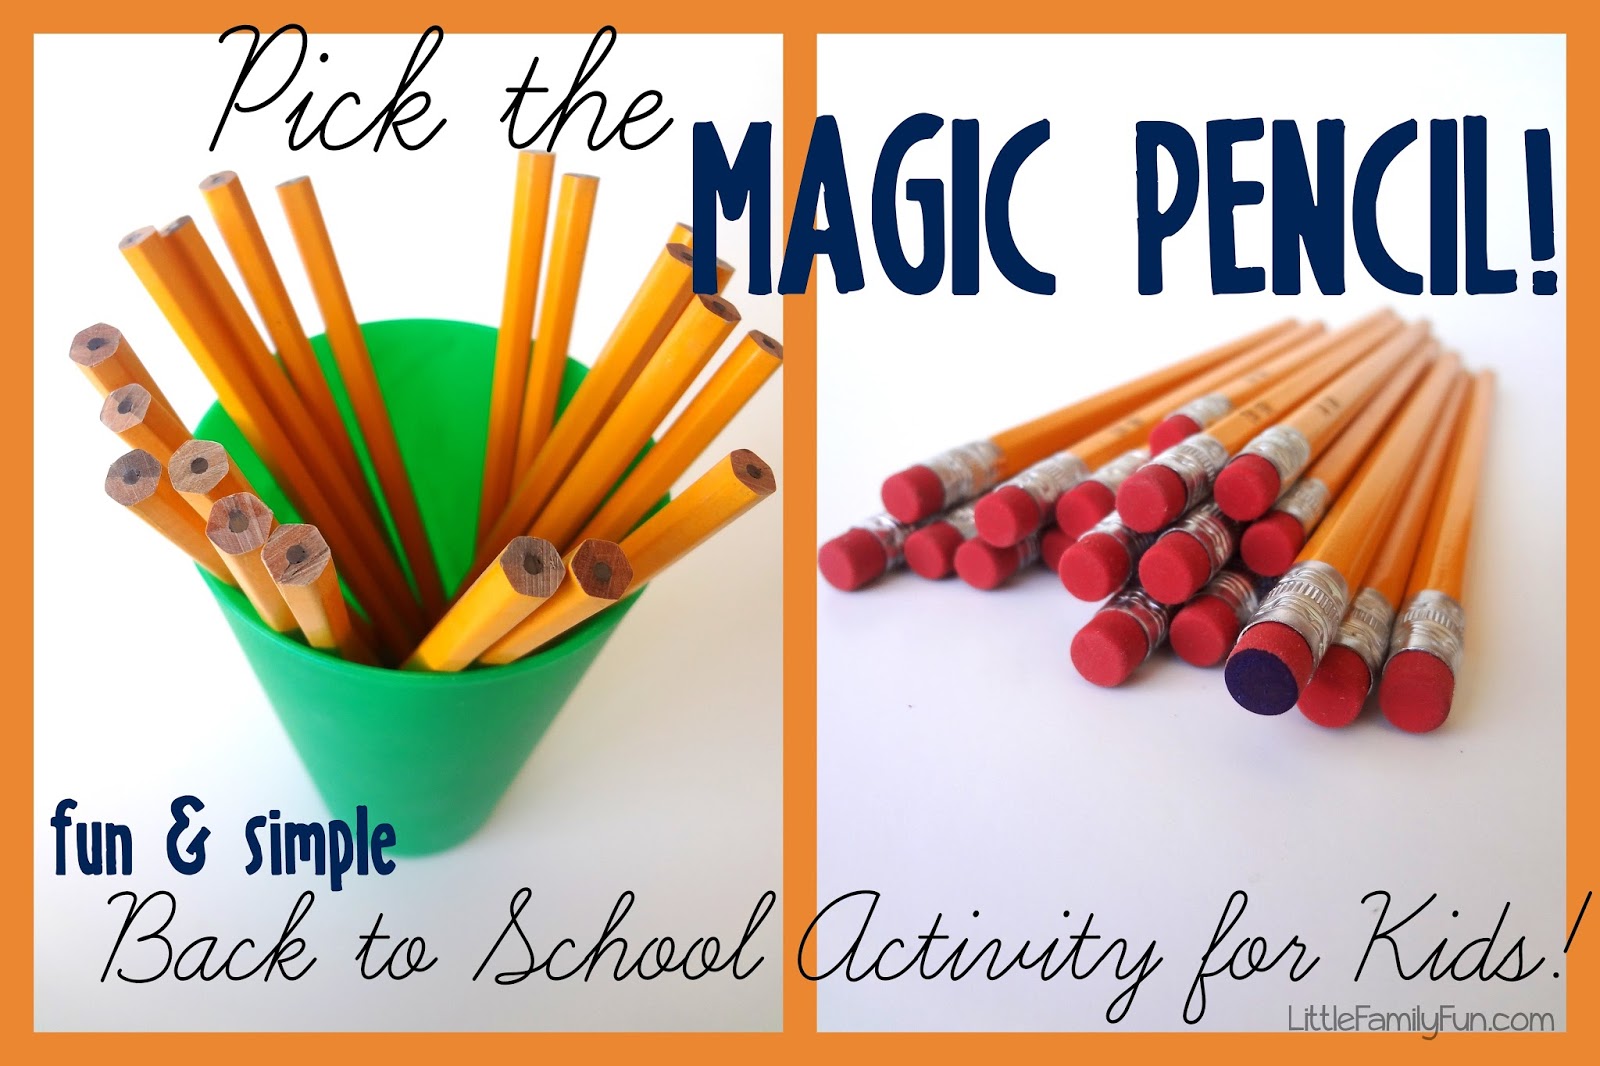 Little Family Fun: Magic Pencil Game for Kids!